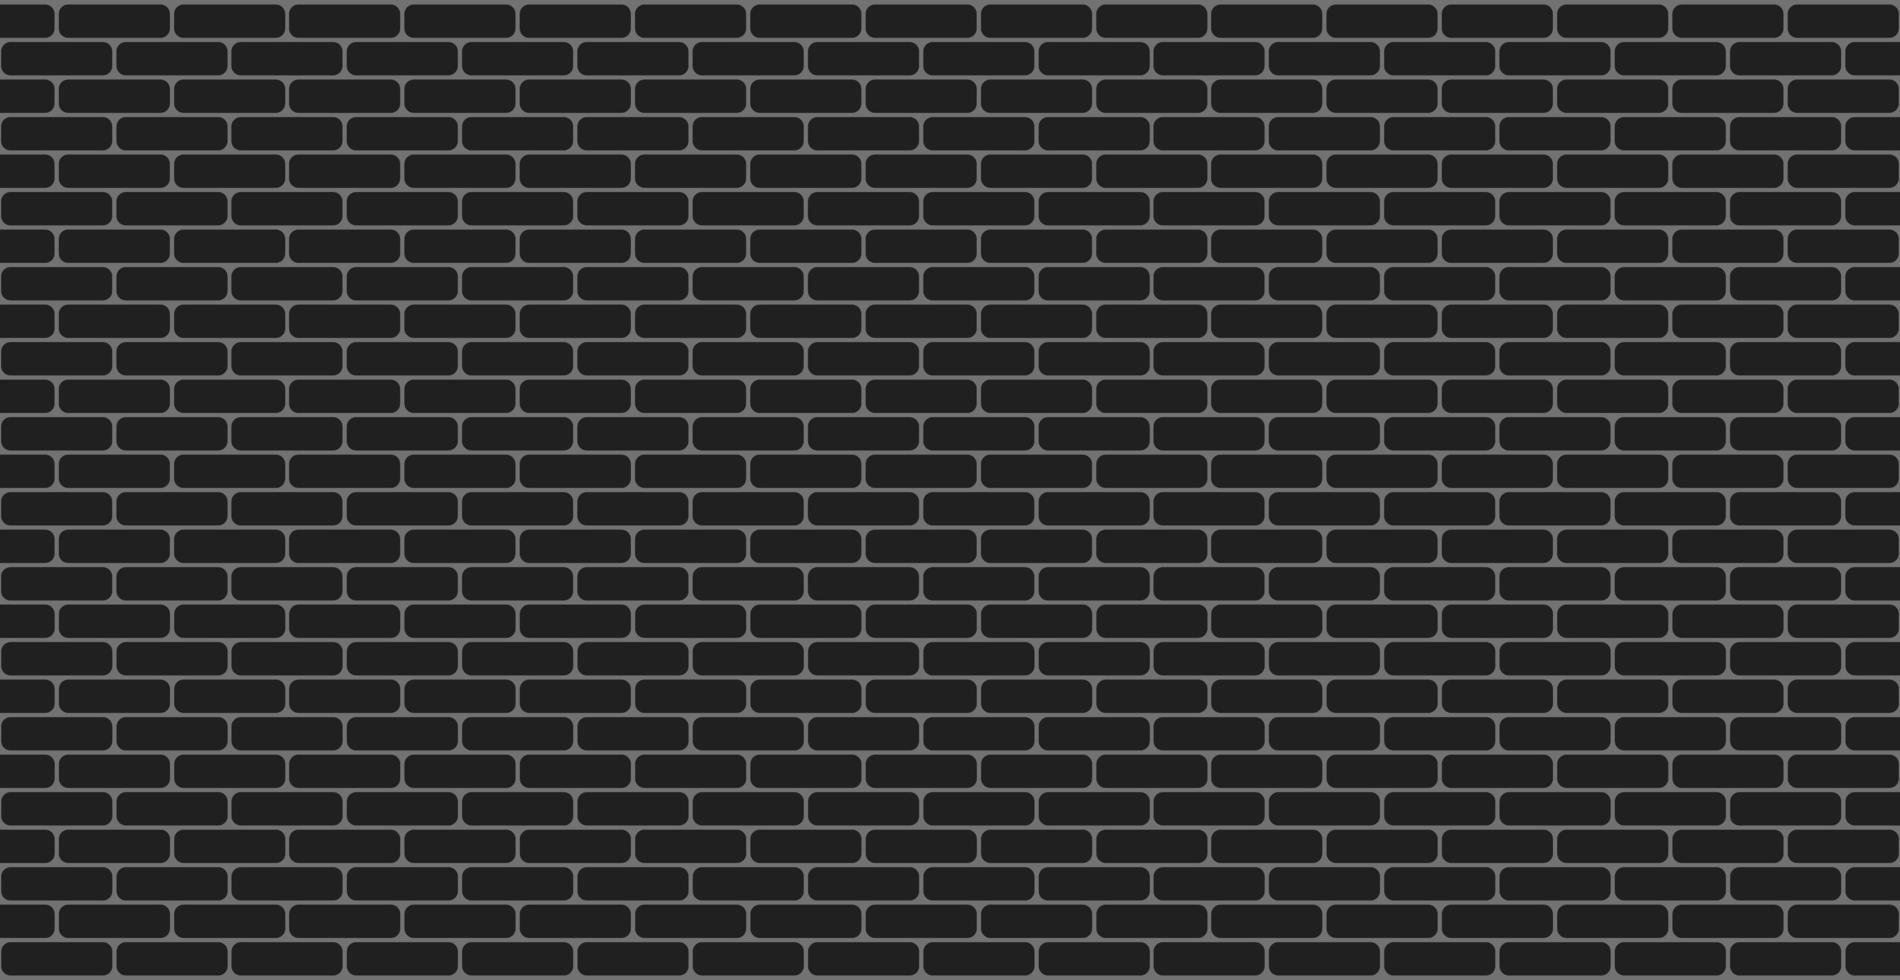 Panoramic dark background texture smooth brickwork - Vector